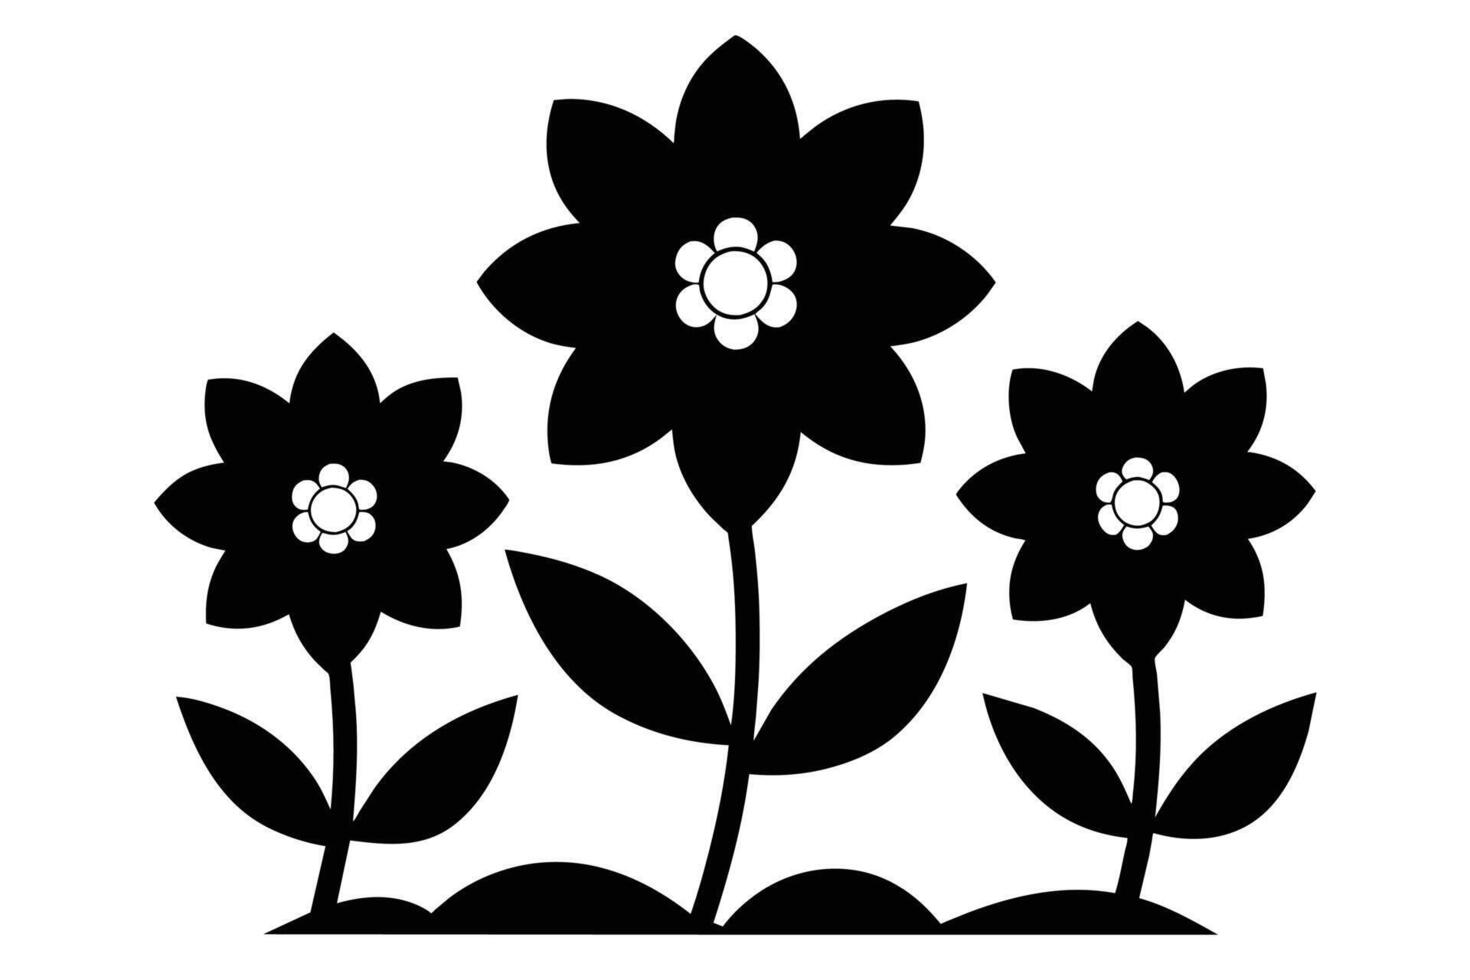 Black Cutout Symbols Of Flowers vector